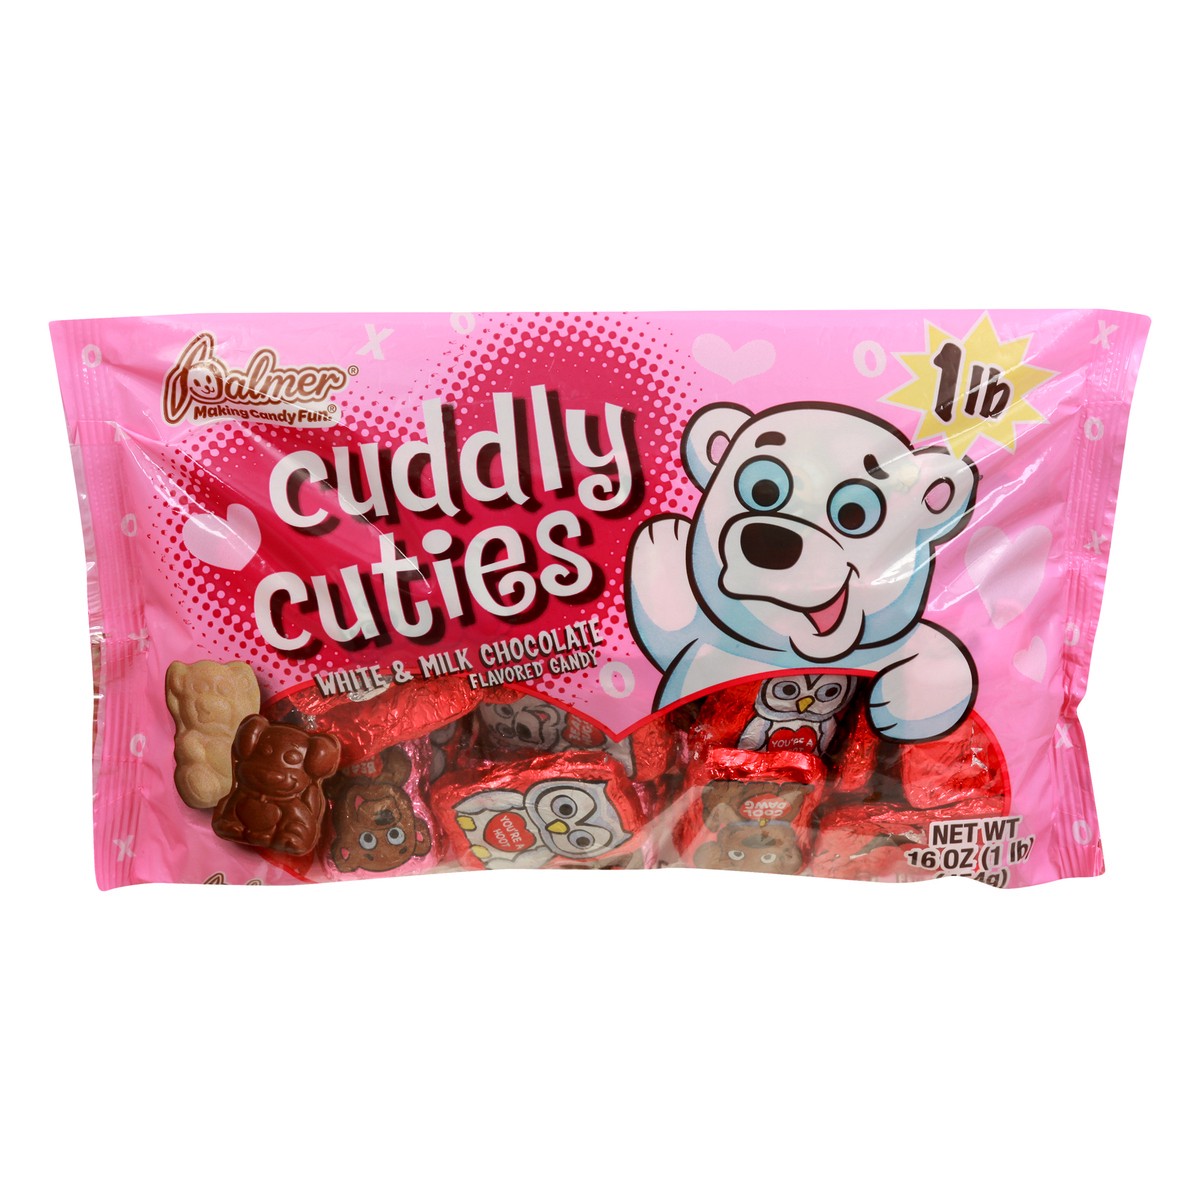 slide 1 of 12, Palmer Cuddly Cuties White & Milk Chocolate Candy 16 oz, 16 oz